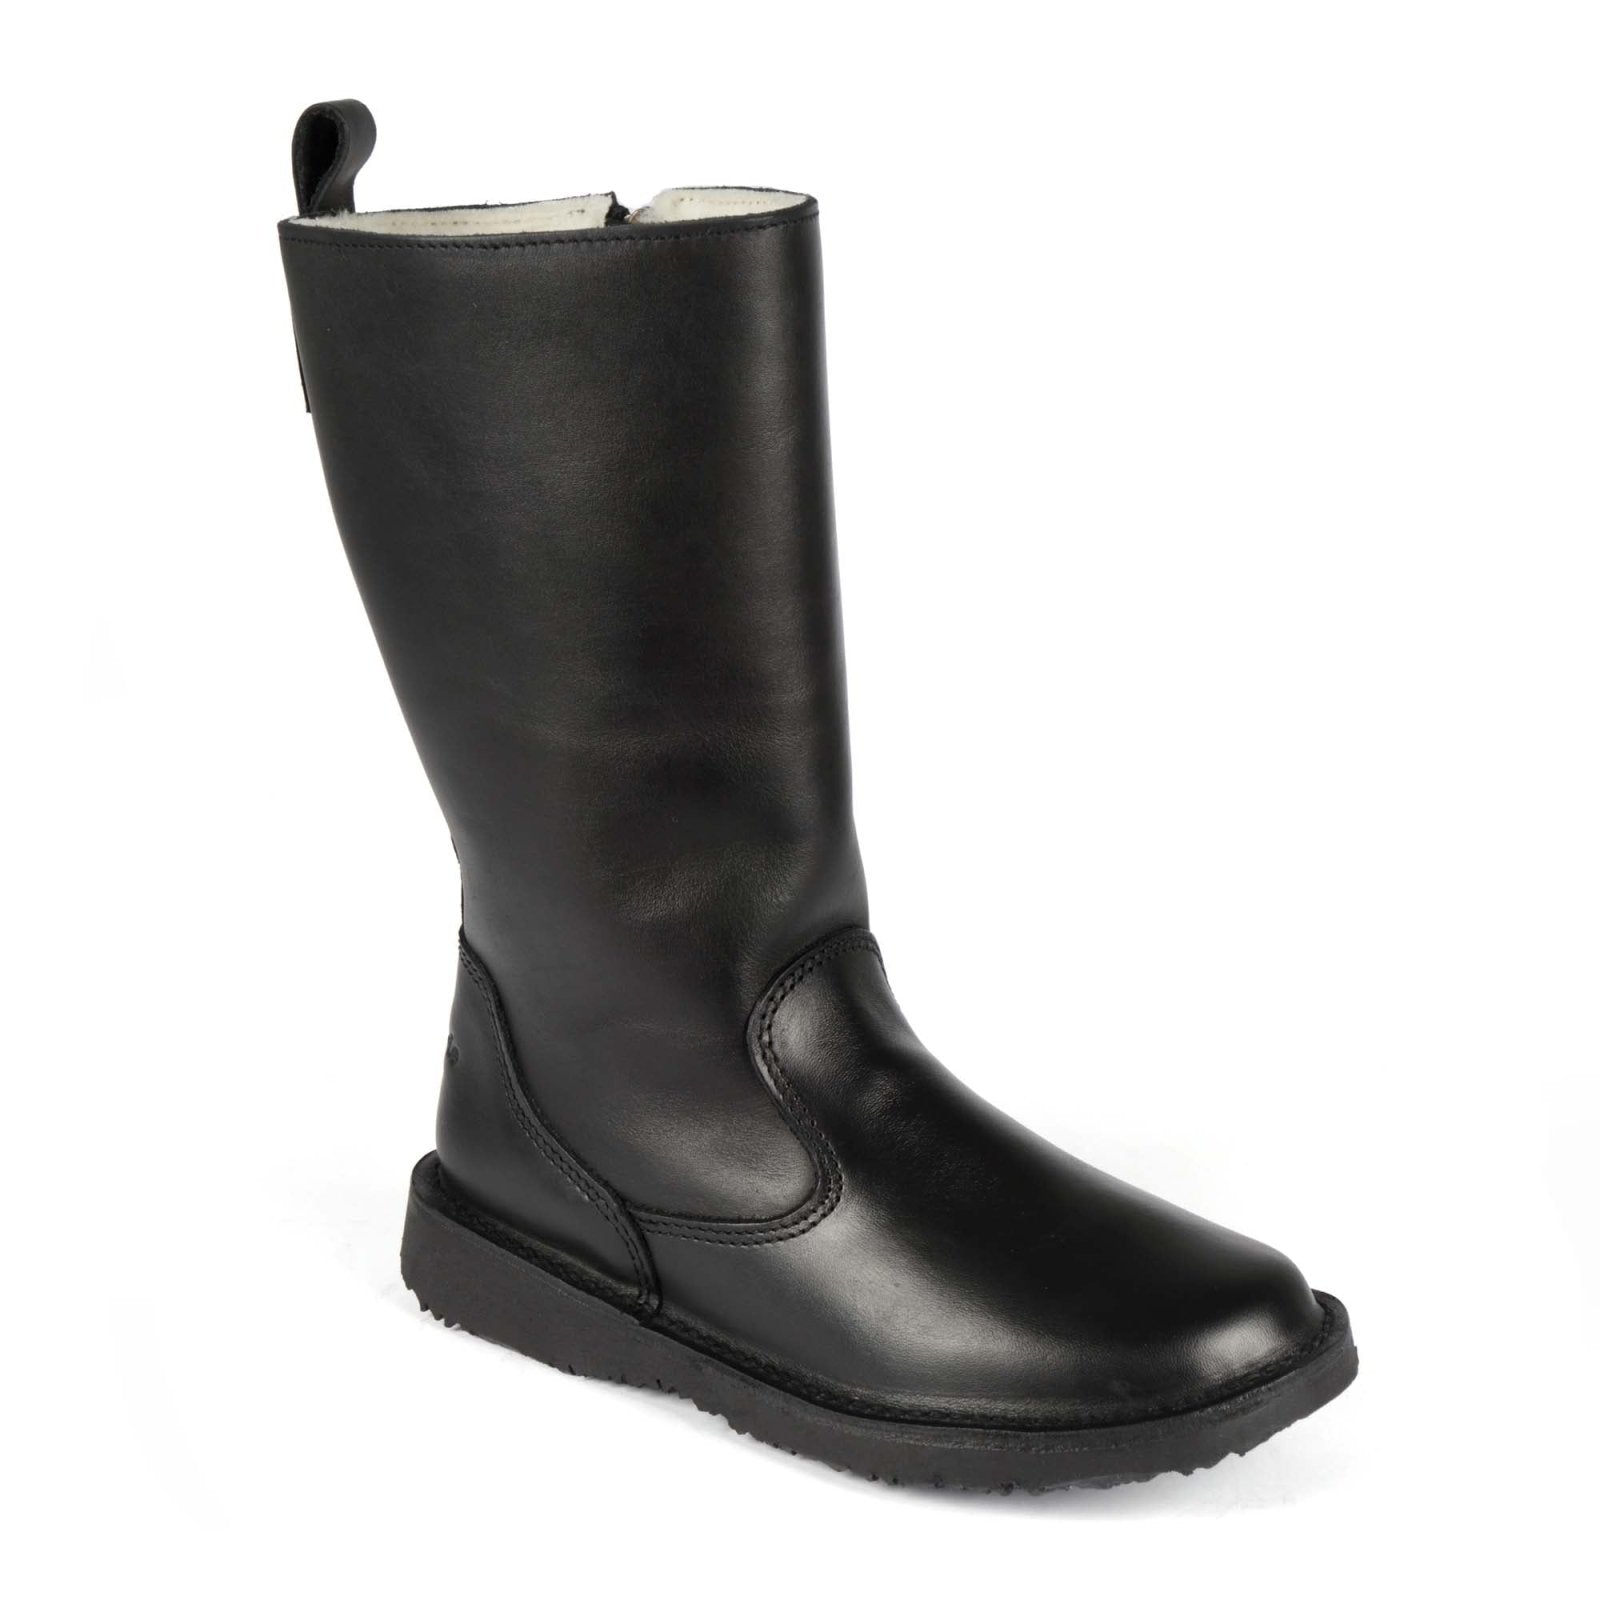 Eskimo 100% wool - lined ladies premium leather boot - Bundu Black - Freestyle SA Proudly local leather boots veldskoens vellies leather shoes suede veldskoens